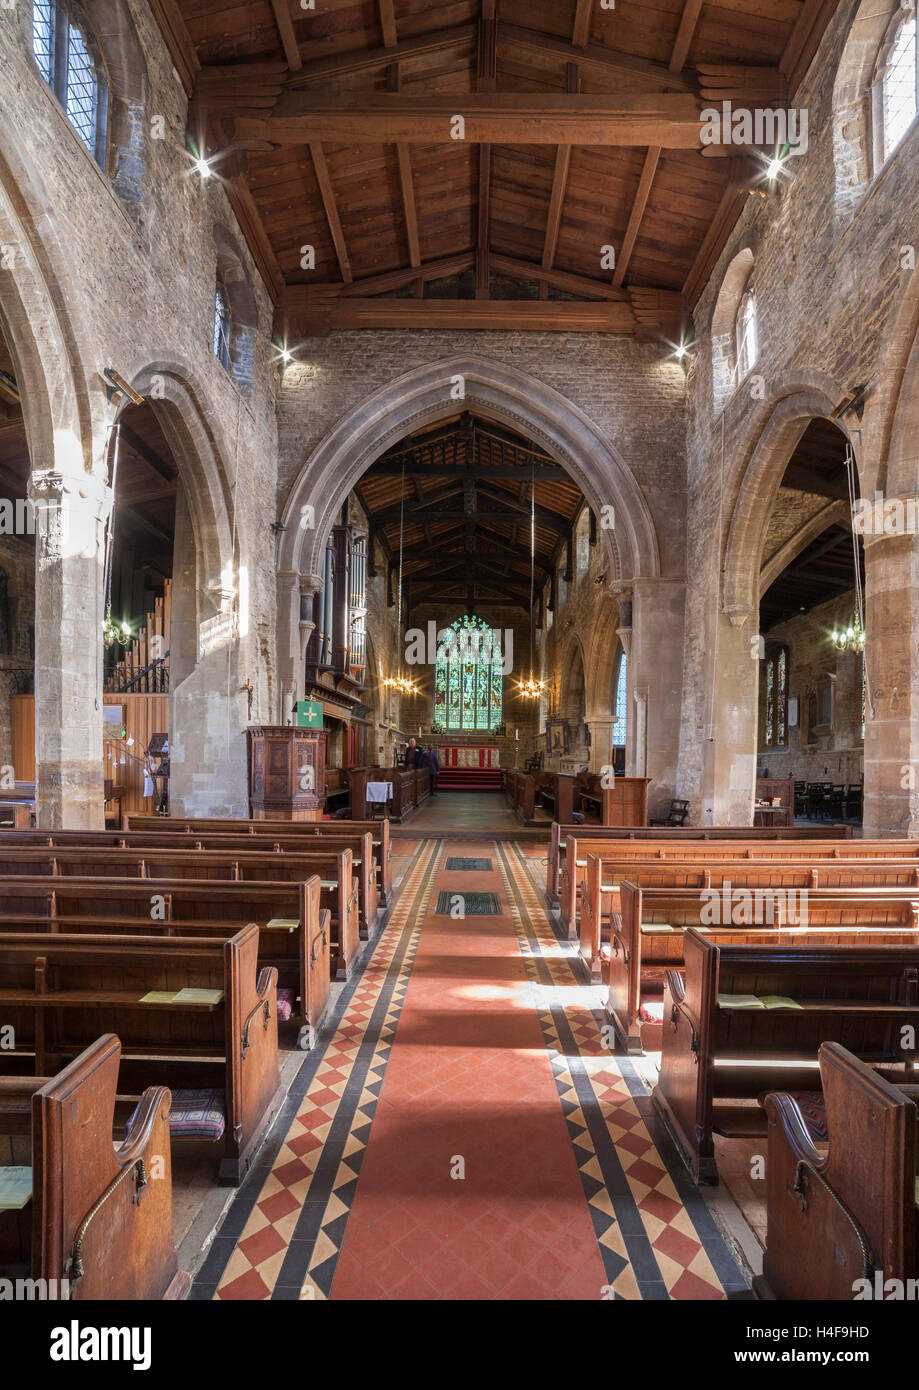 St Lawence church, Towcester, Northamptonshire, U.K. Stock Photo